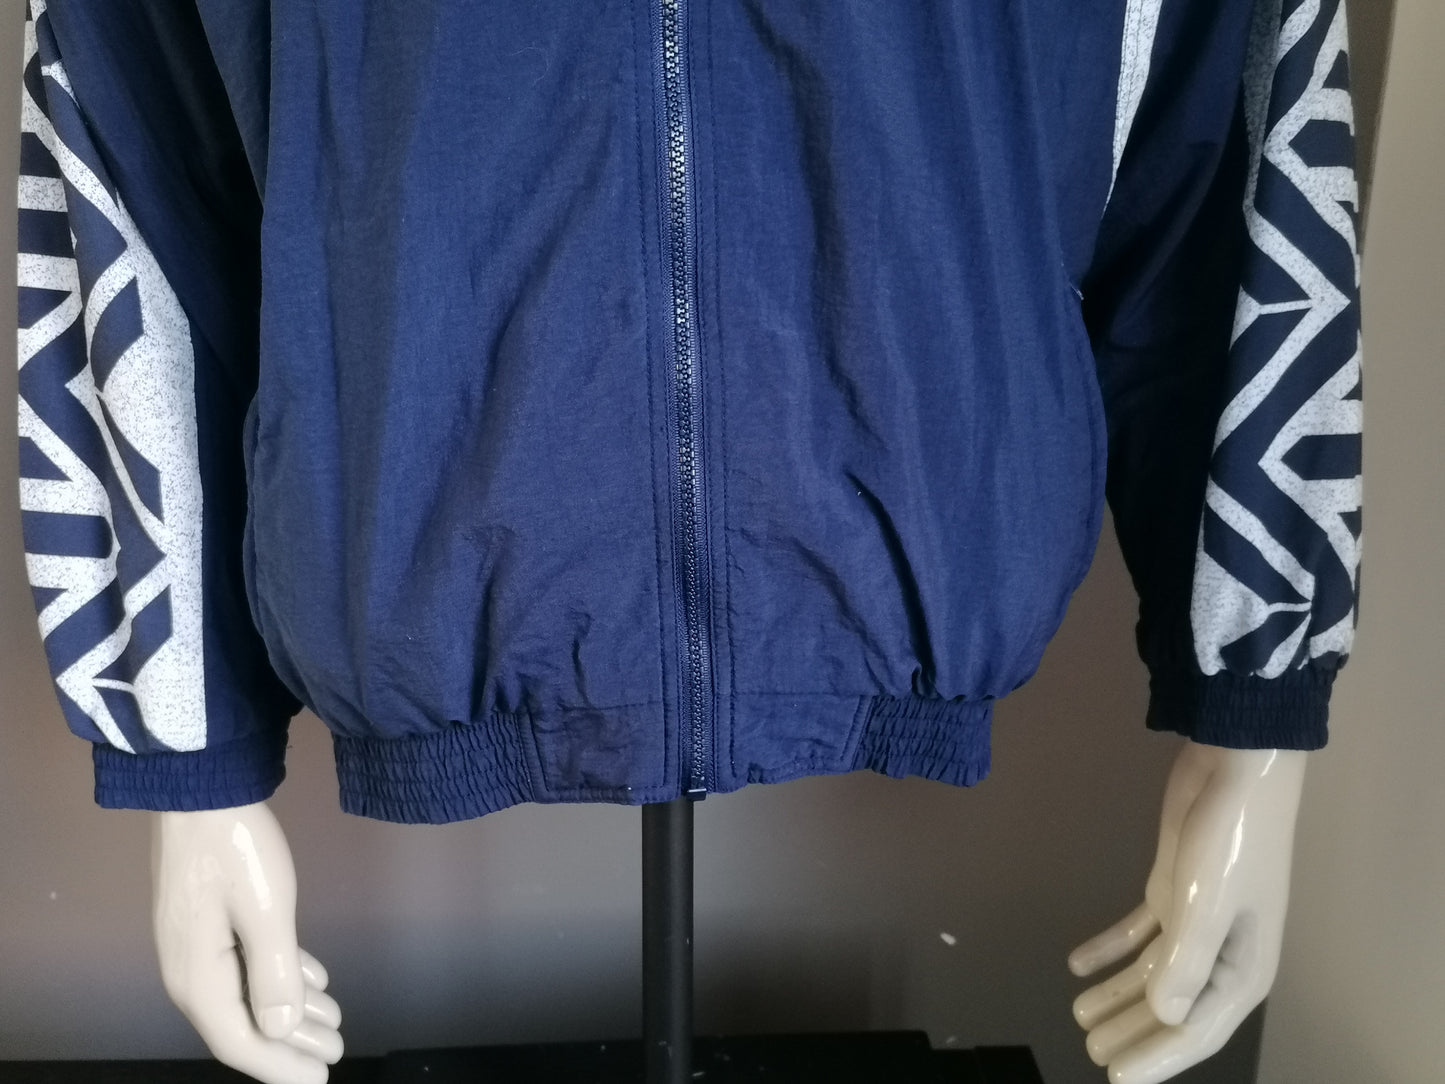 Vintage Erima 80s-90's training jacket. Blue white yellow colored. Size XL.